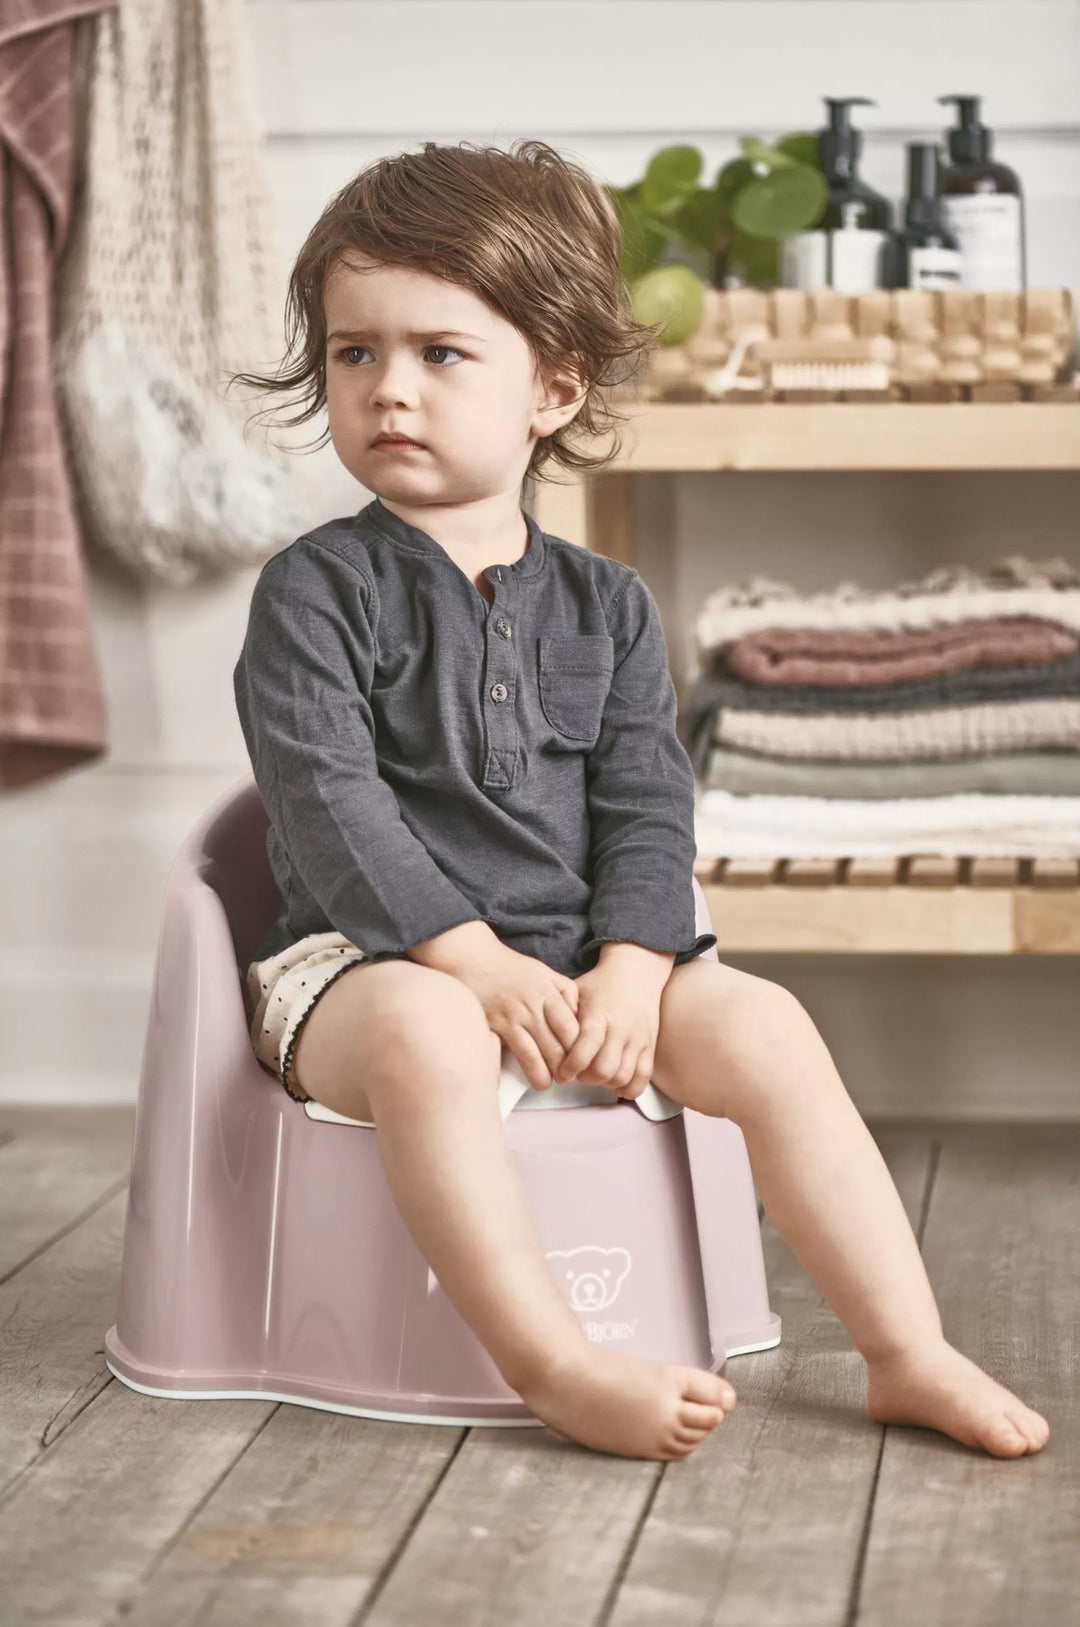 Baby Bjorn Potty Chair